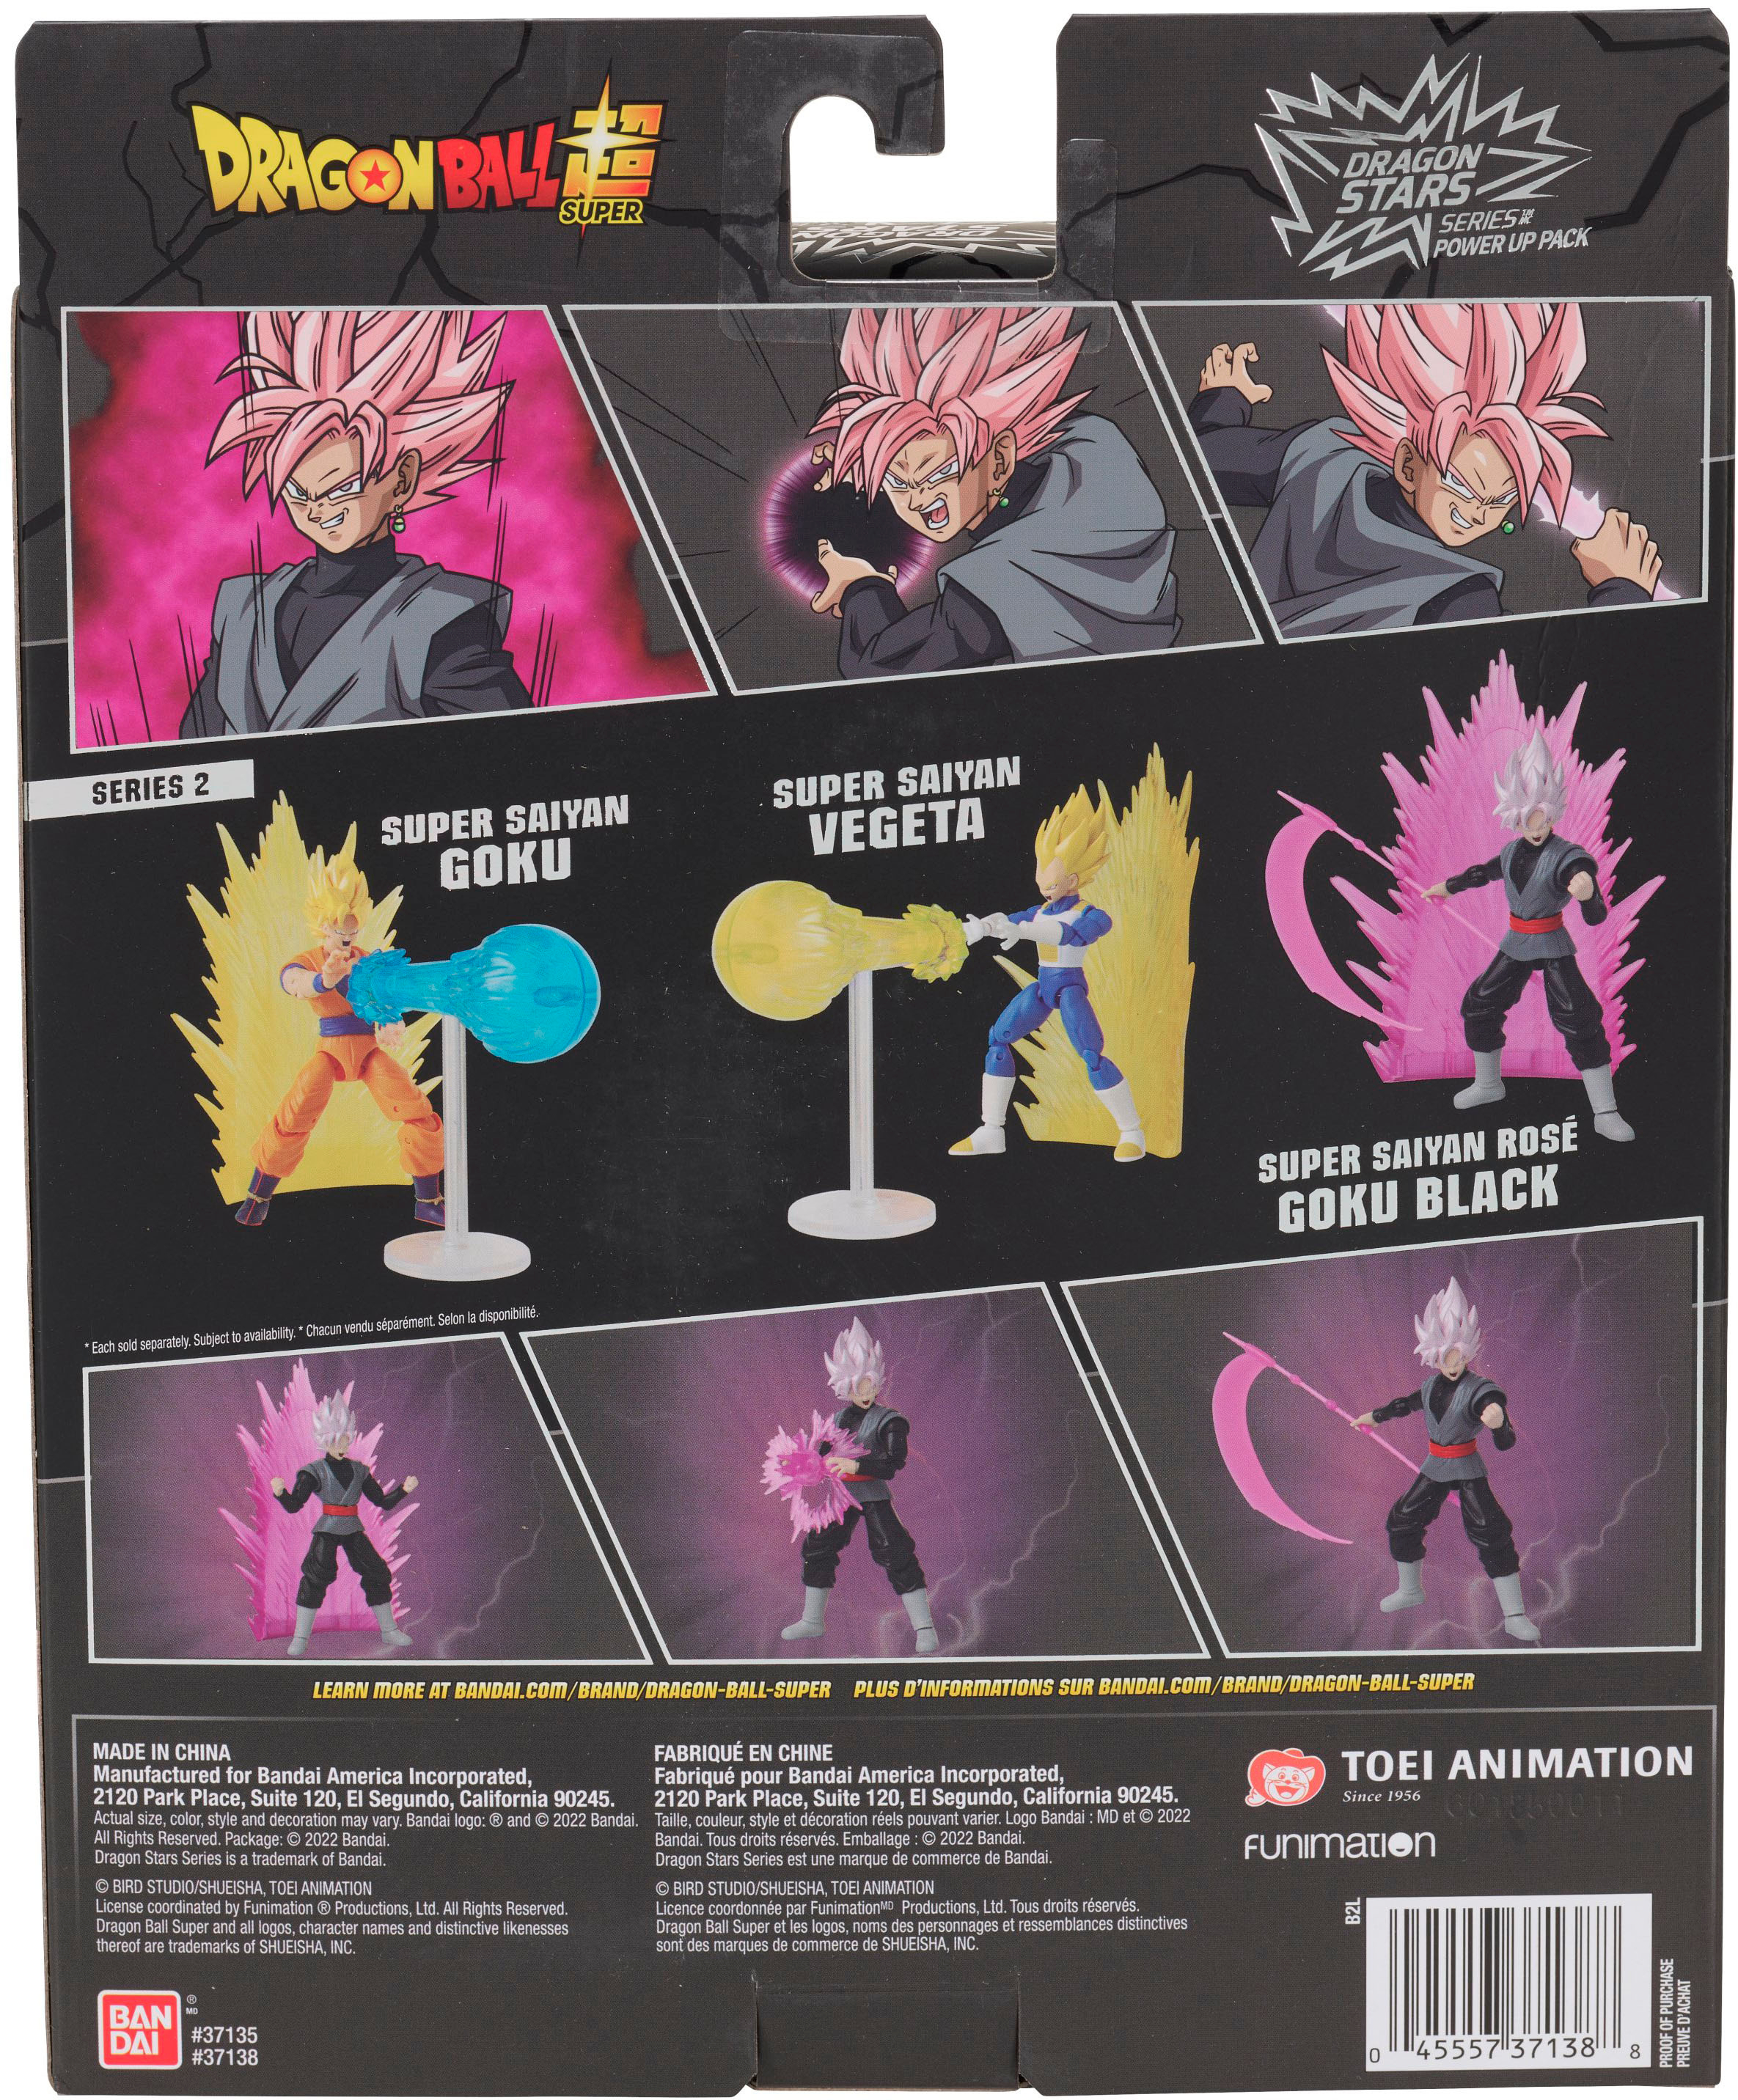 Dragon Ball Super - Goku Black Rose Power Up Pack, 6 inch, (37138)